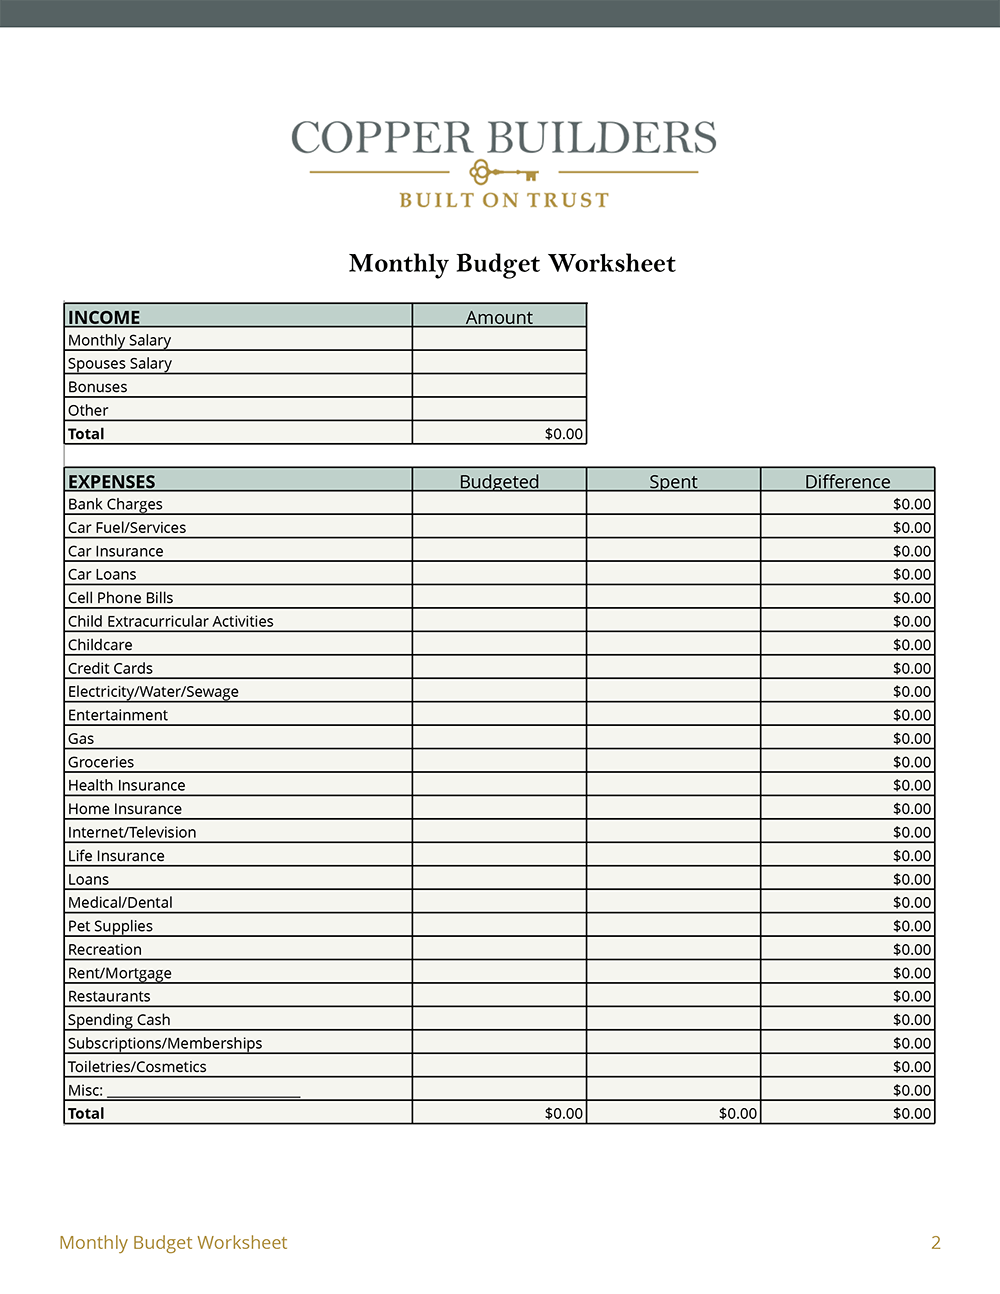 https://info.copperbuilders.com/hubfs/images/premium-content/a2-monthly-budget-worksheet/cop-monthly-budget-worksheet-1.png